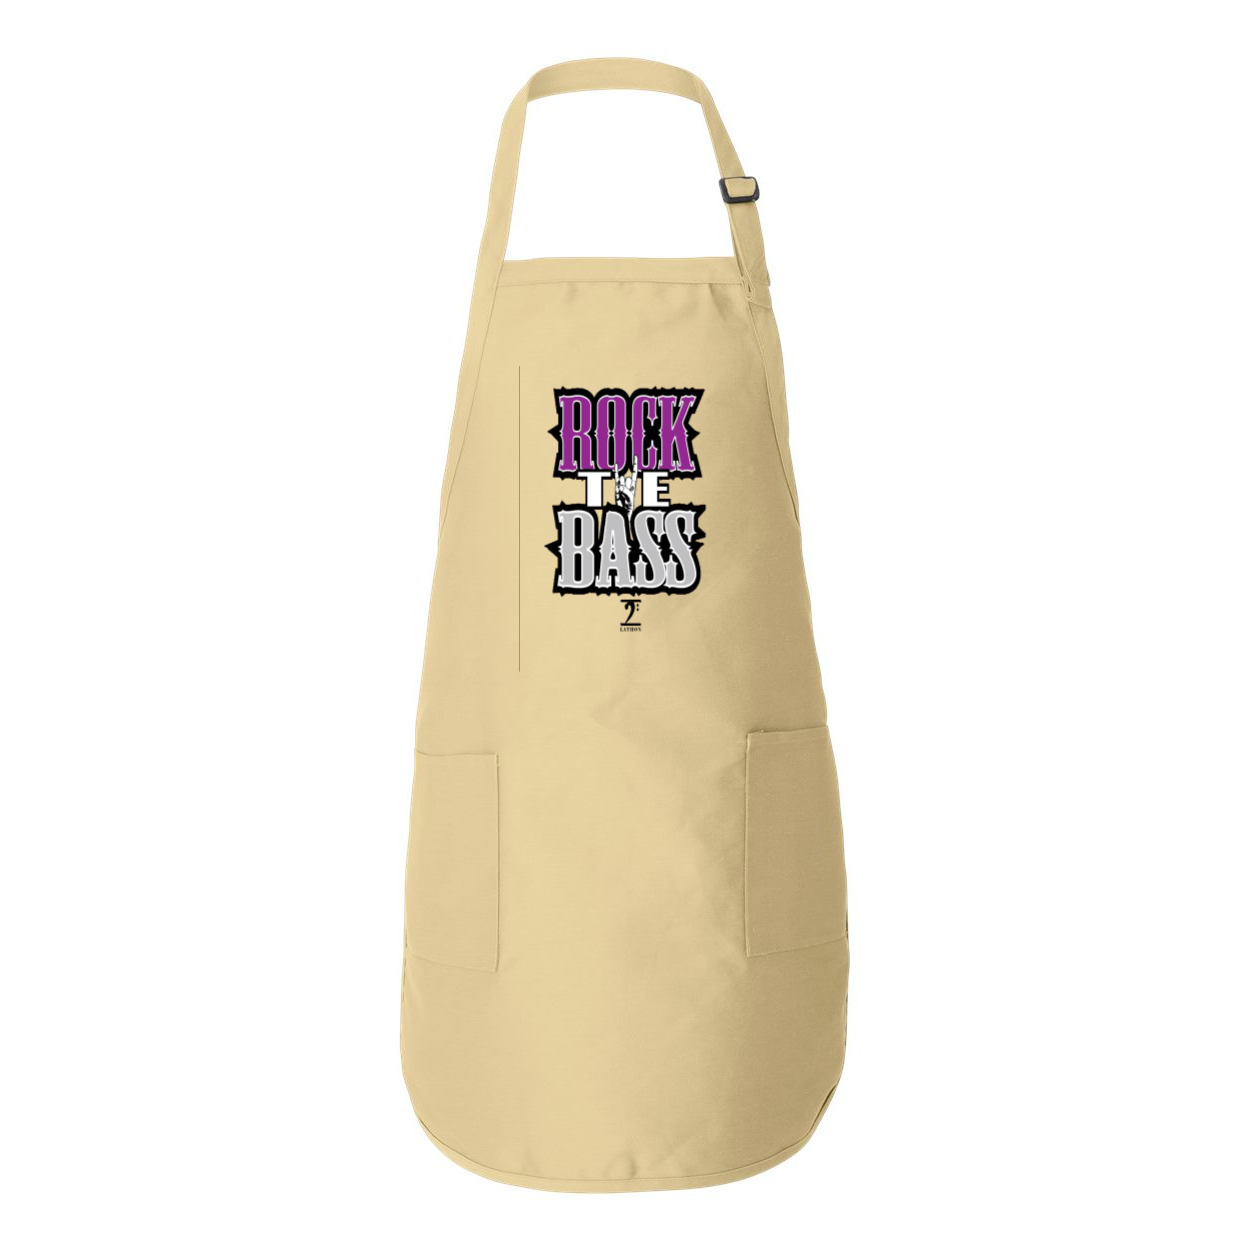 ROCK THE BASS- BASS CHIC Full-Length Apron with Pockets - Lathon Bass Wear